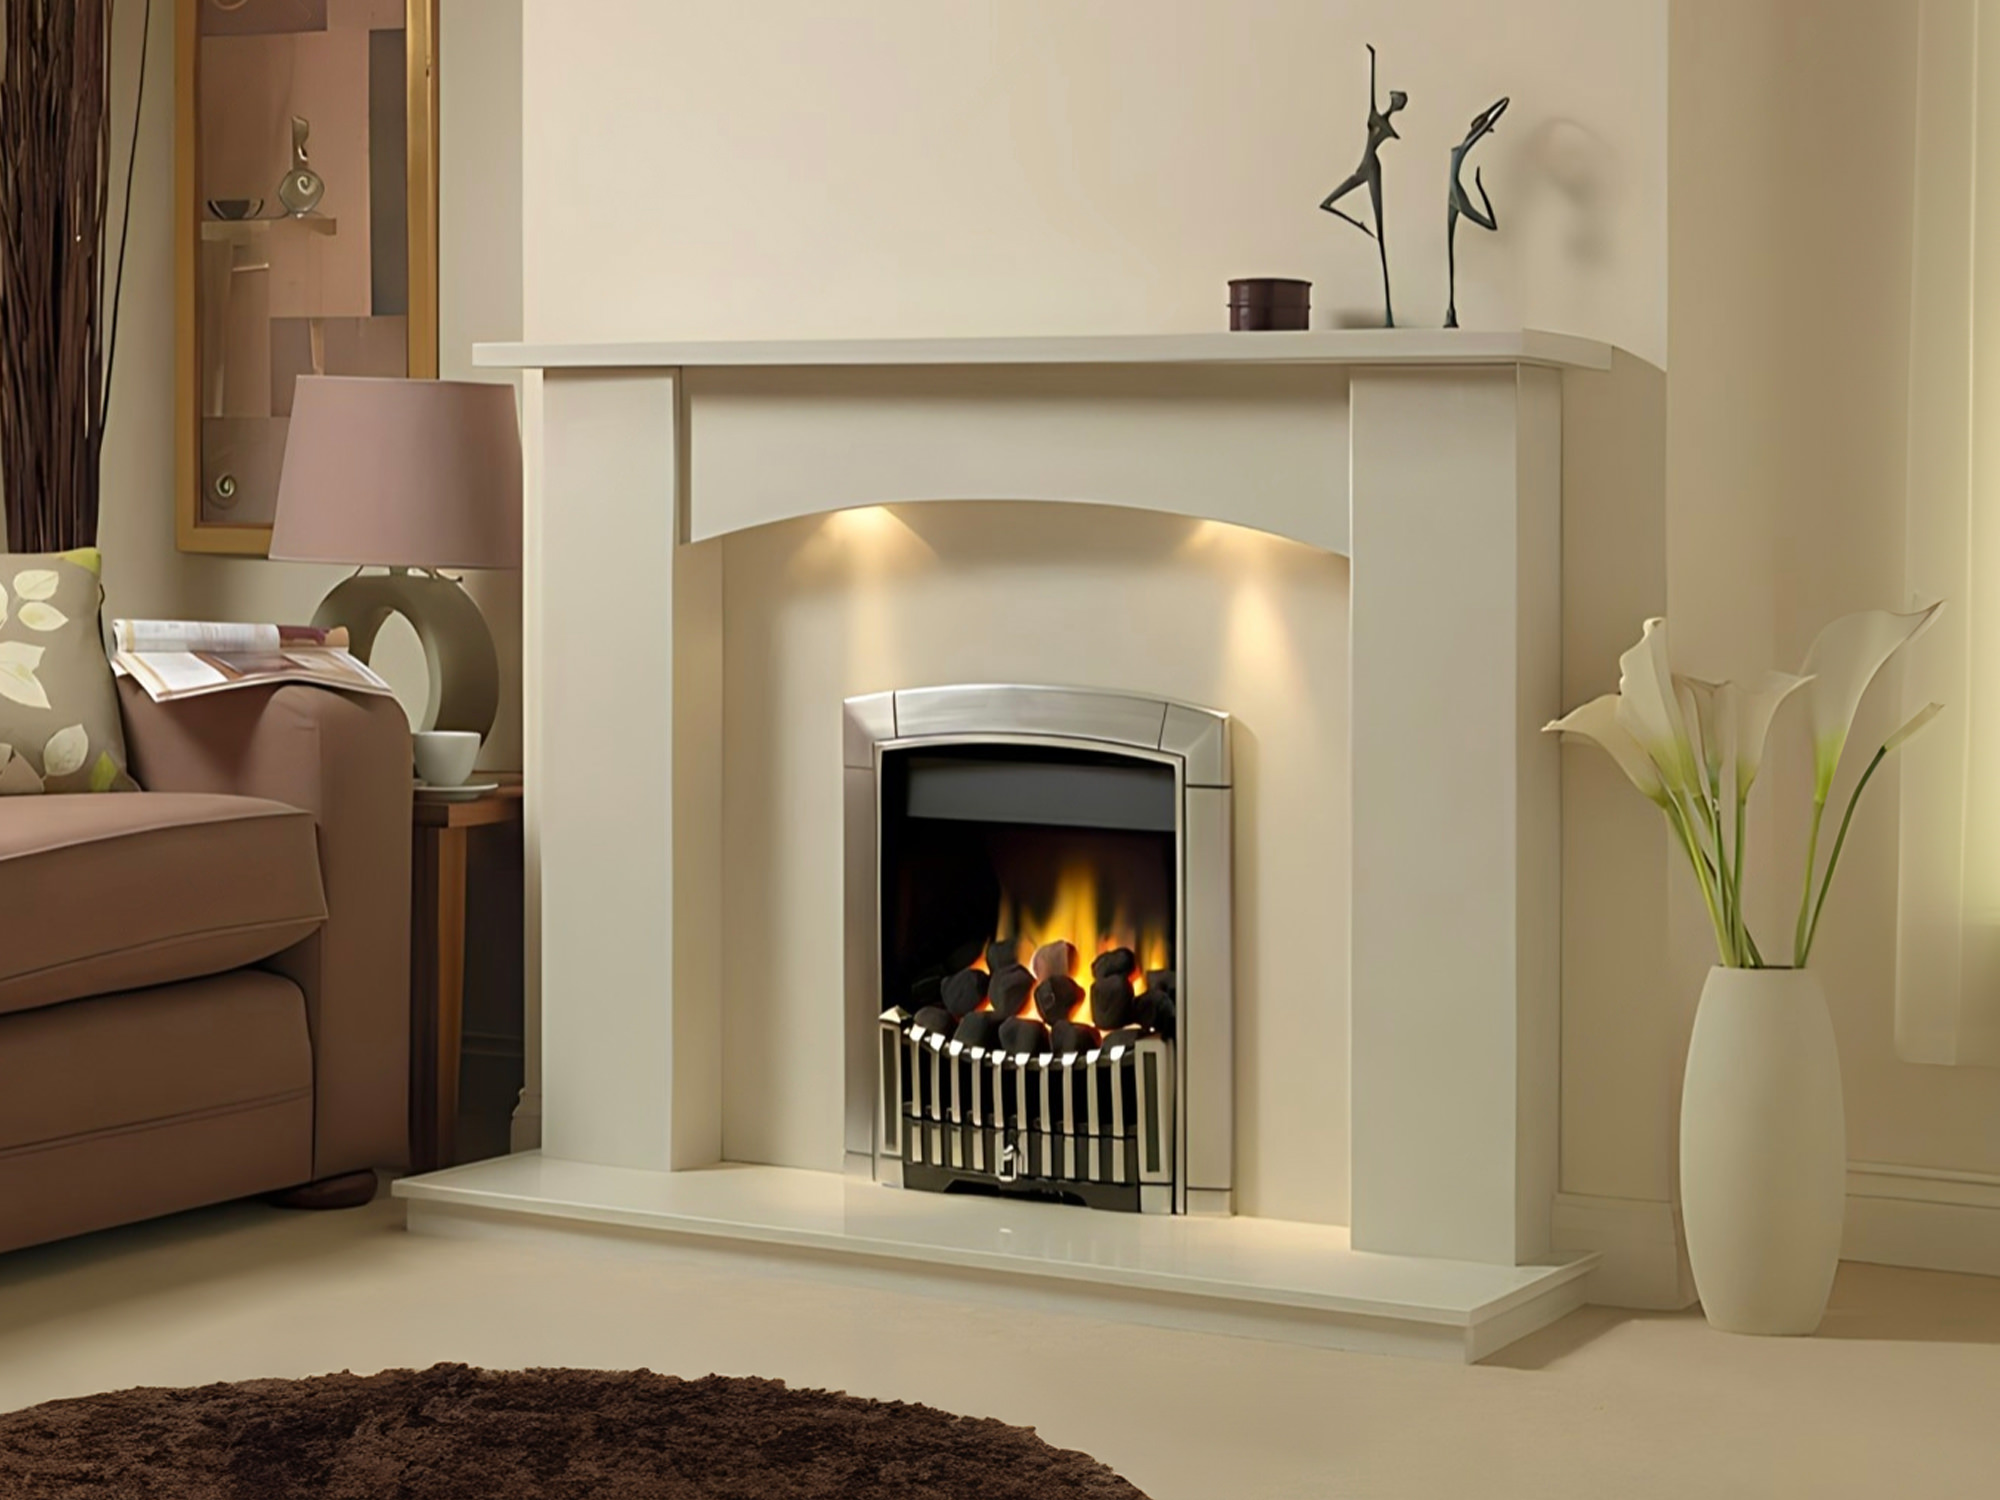 Designer Fireplaces' Milton Marble Fireplace